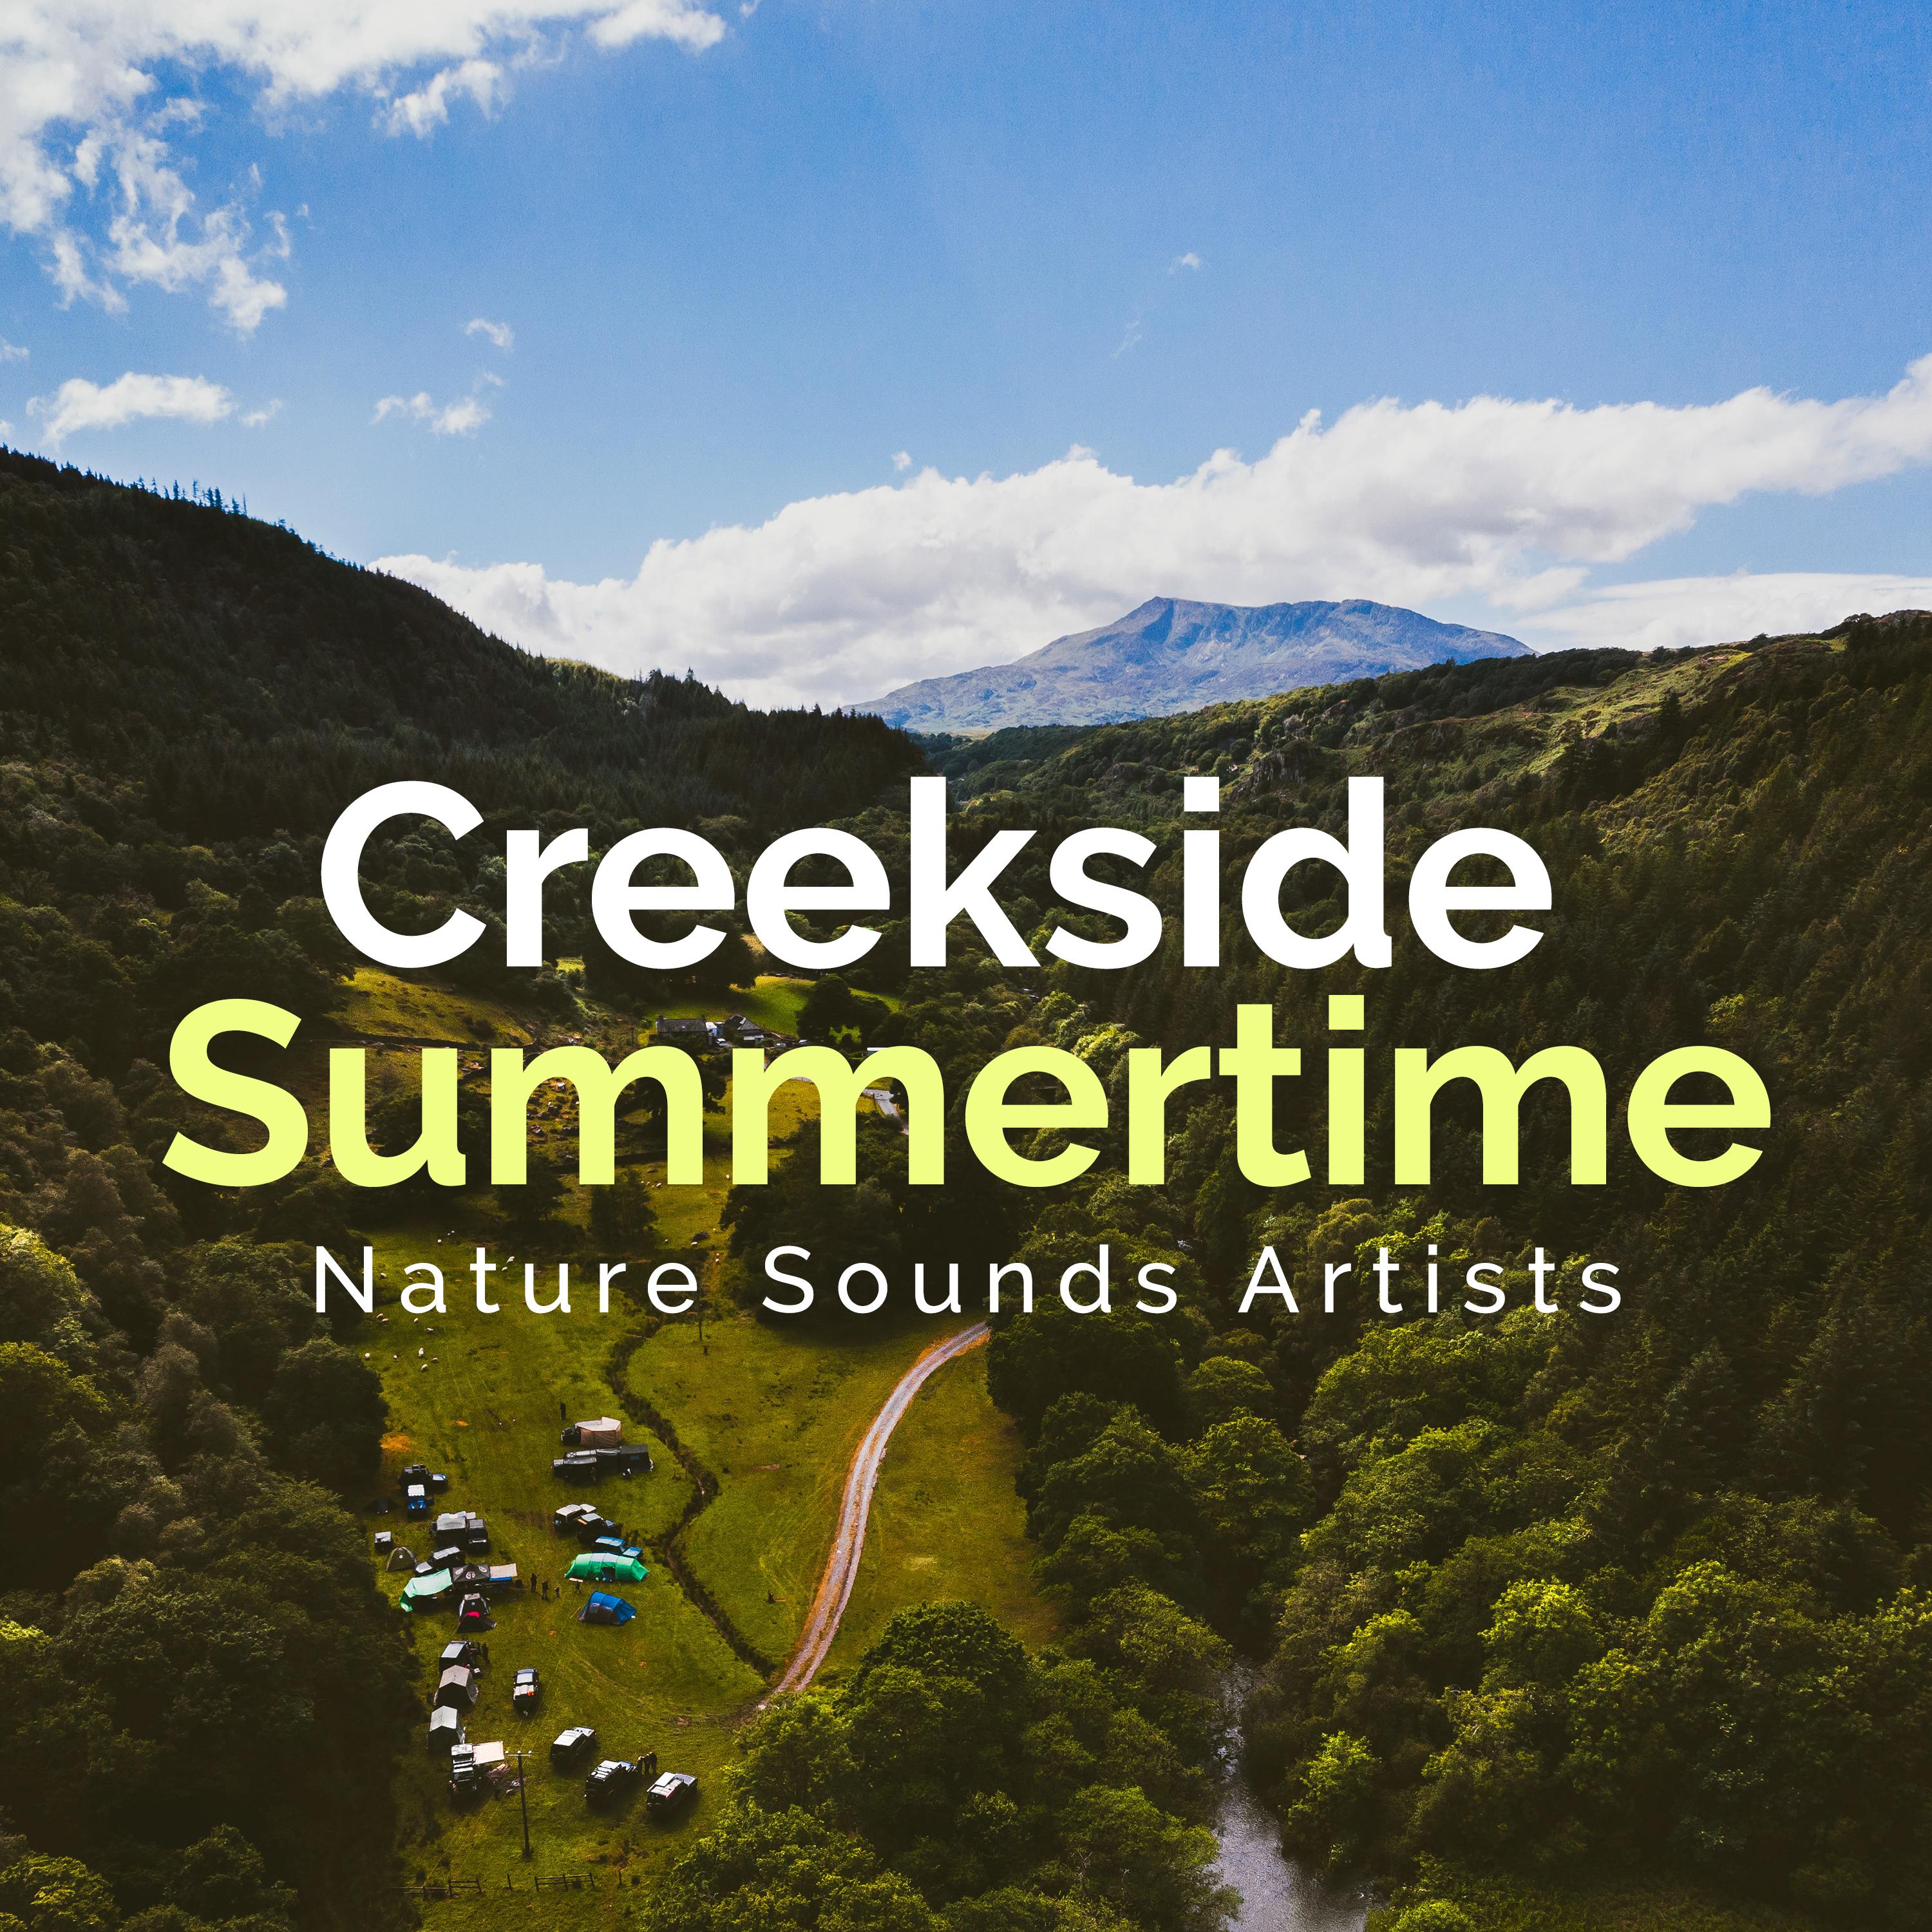 Creekside Summertime